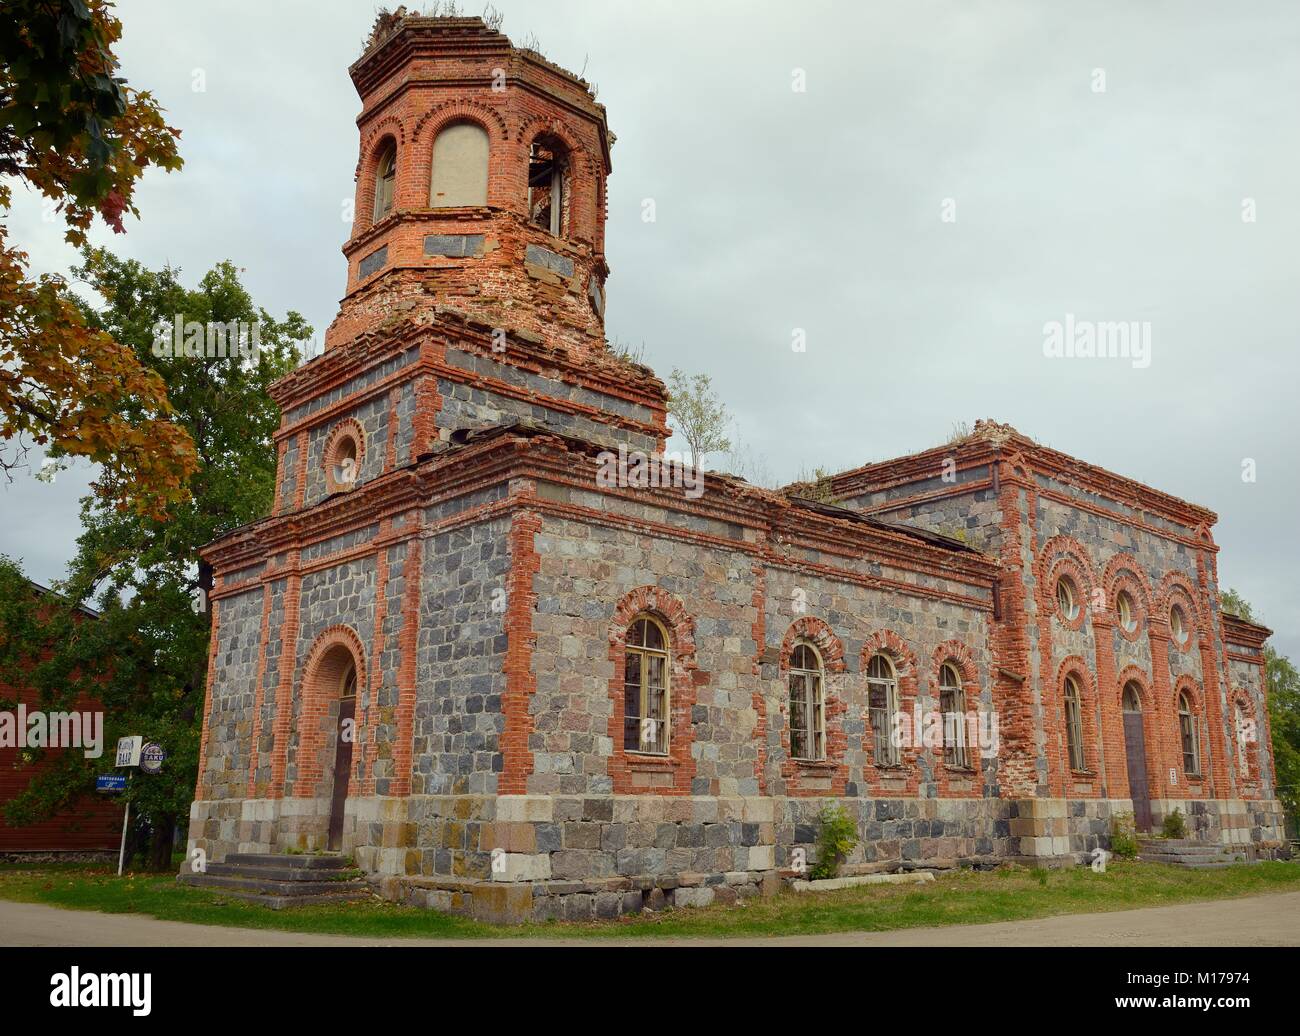 Ruins of an old Russian orthodox church, Lihula, Estonia, September 2017. Stock Photo